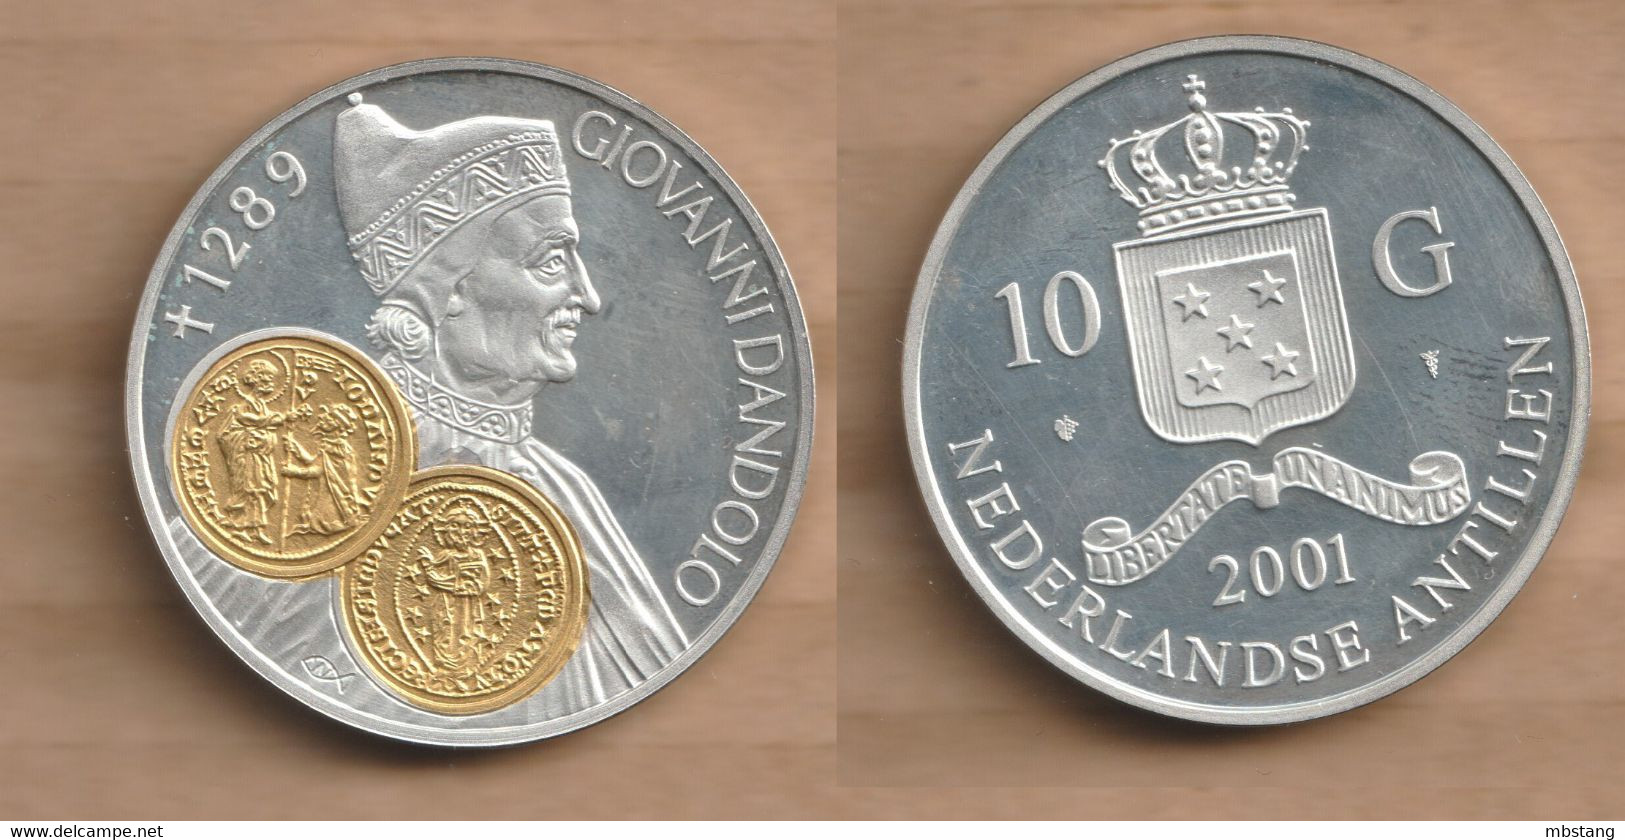 ANTILLAS HOLANDESAS 10 Gulden - Beatrix (Dandolo Ducato D'oro) 2001 Silver (.925) • 31.1035 G • ⌀ 40 Mm KM# 53 - Antilles Néerlandaises